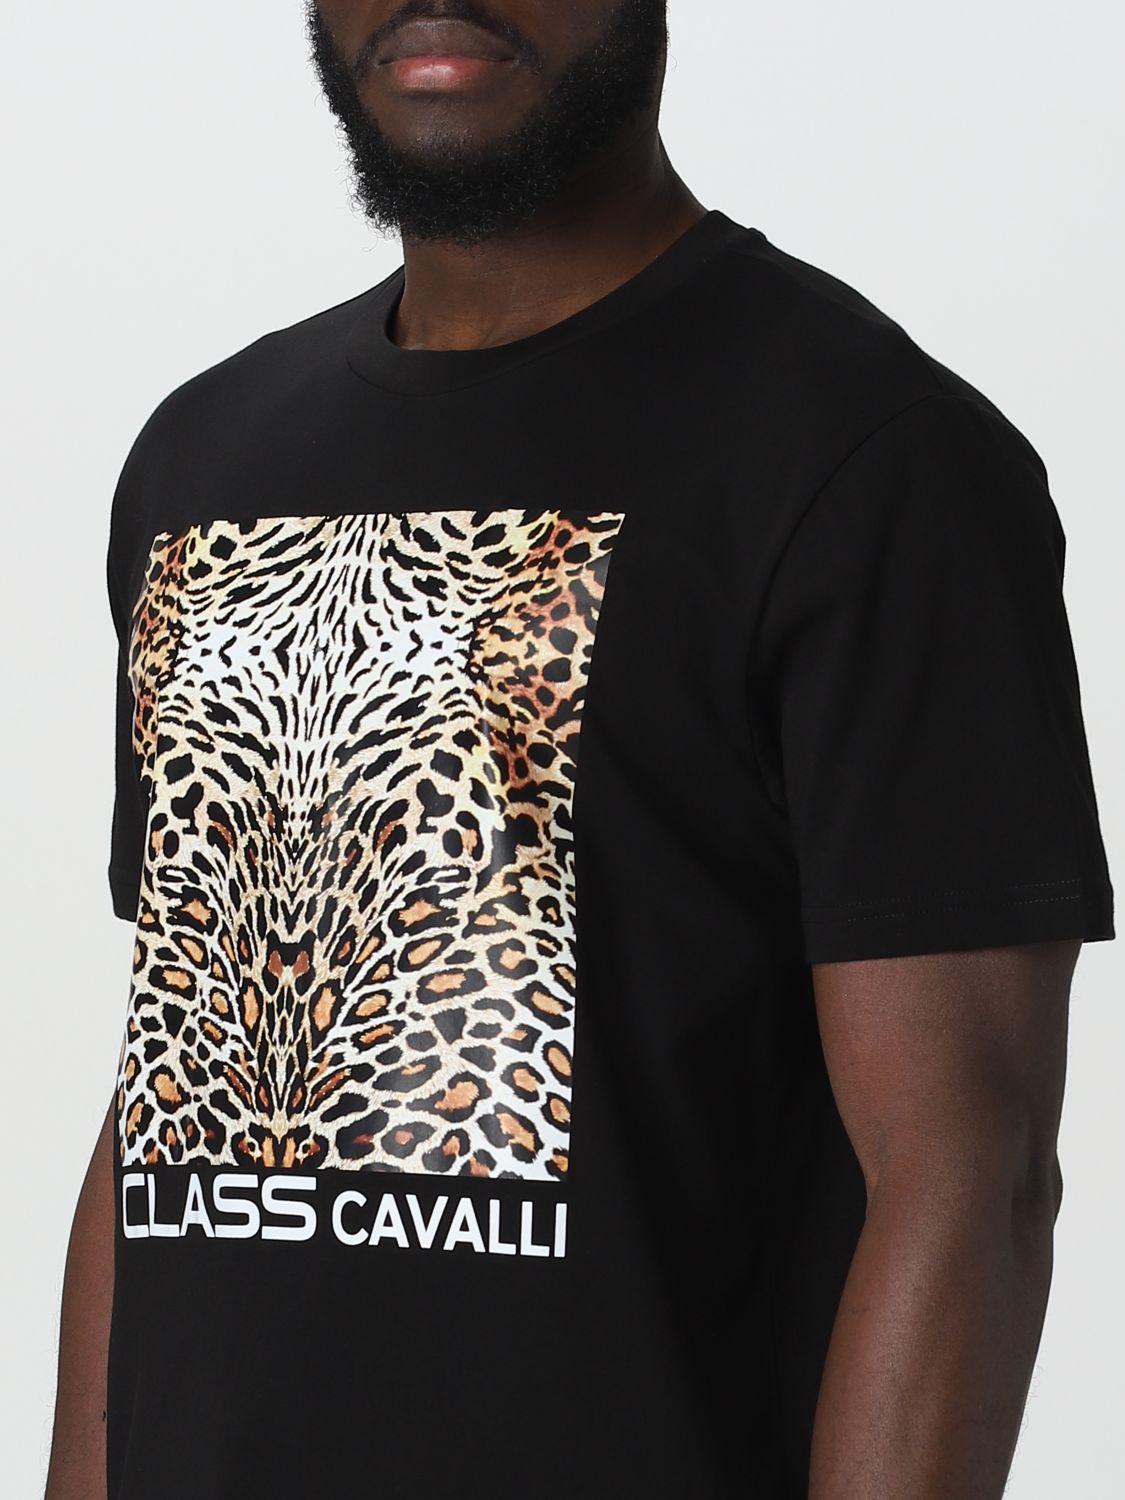 capturar escapar Víspera Class Roberto Cavalli Outlet: t-shirt for man - Black | Class Roberto  Cavalli t-shirt PXT61B-JD060 online on GIGLIO.COM